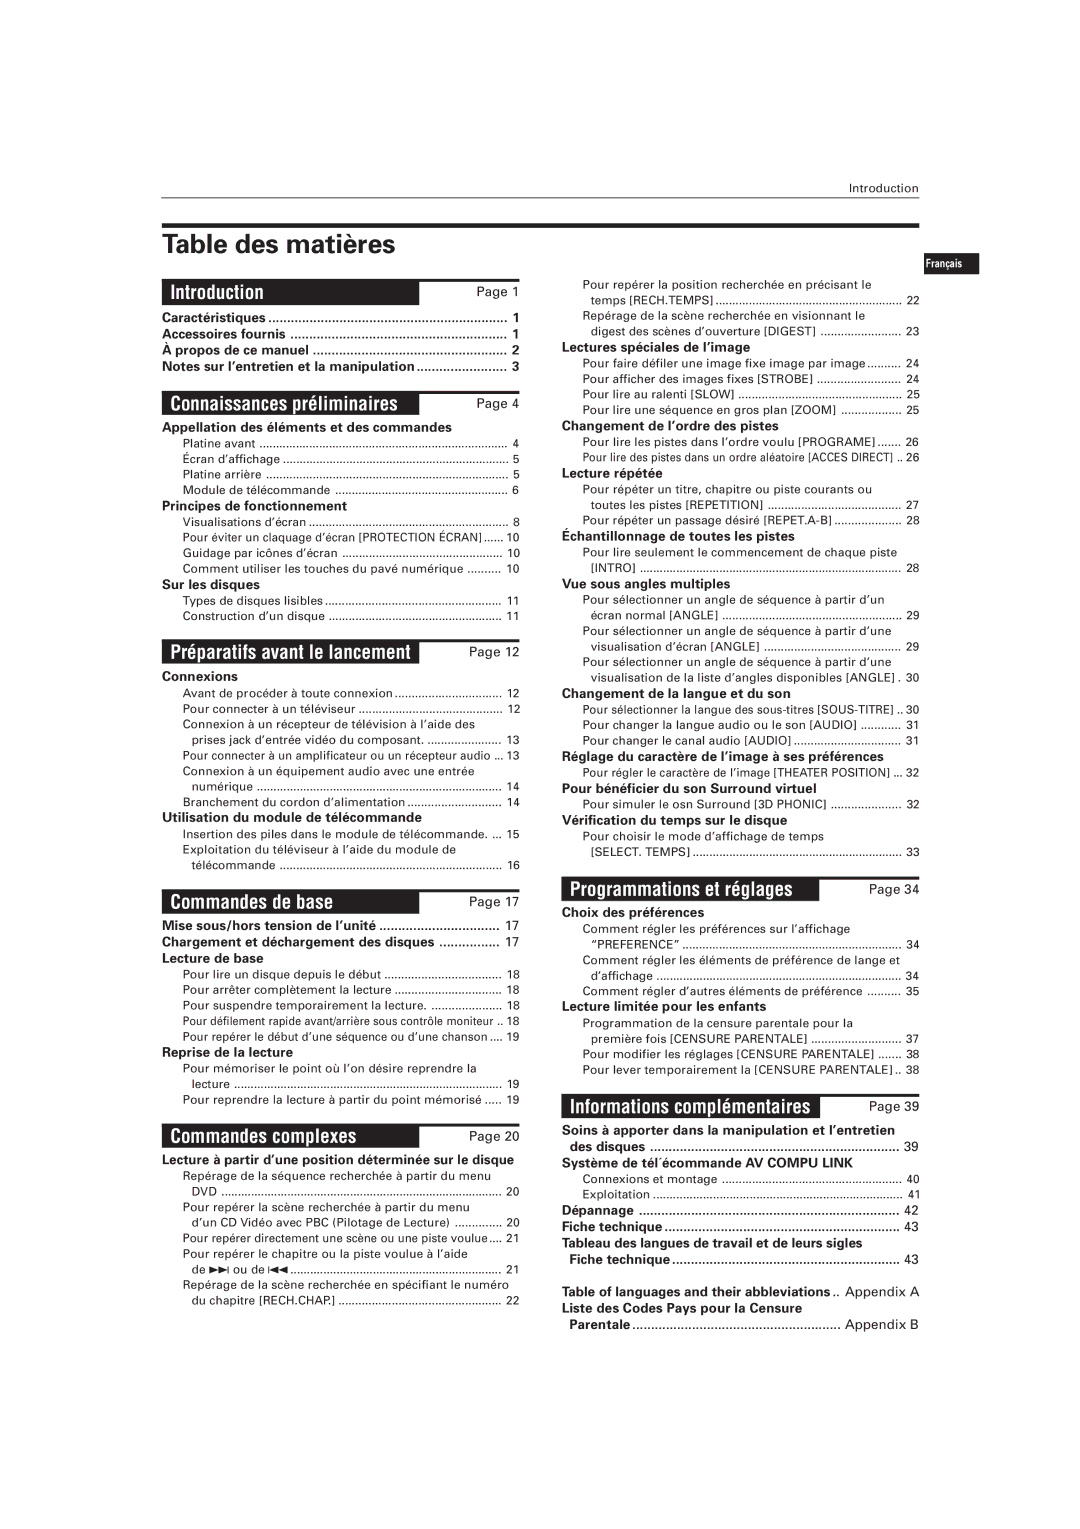 JVC LVT0336-003A manual Table des matières 